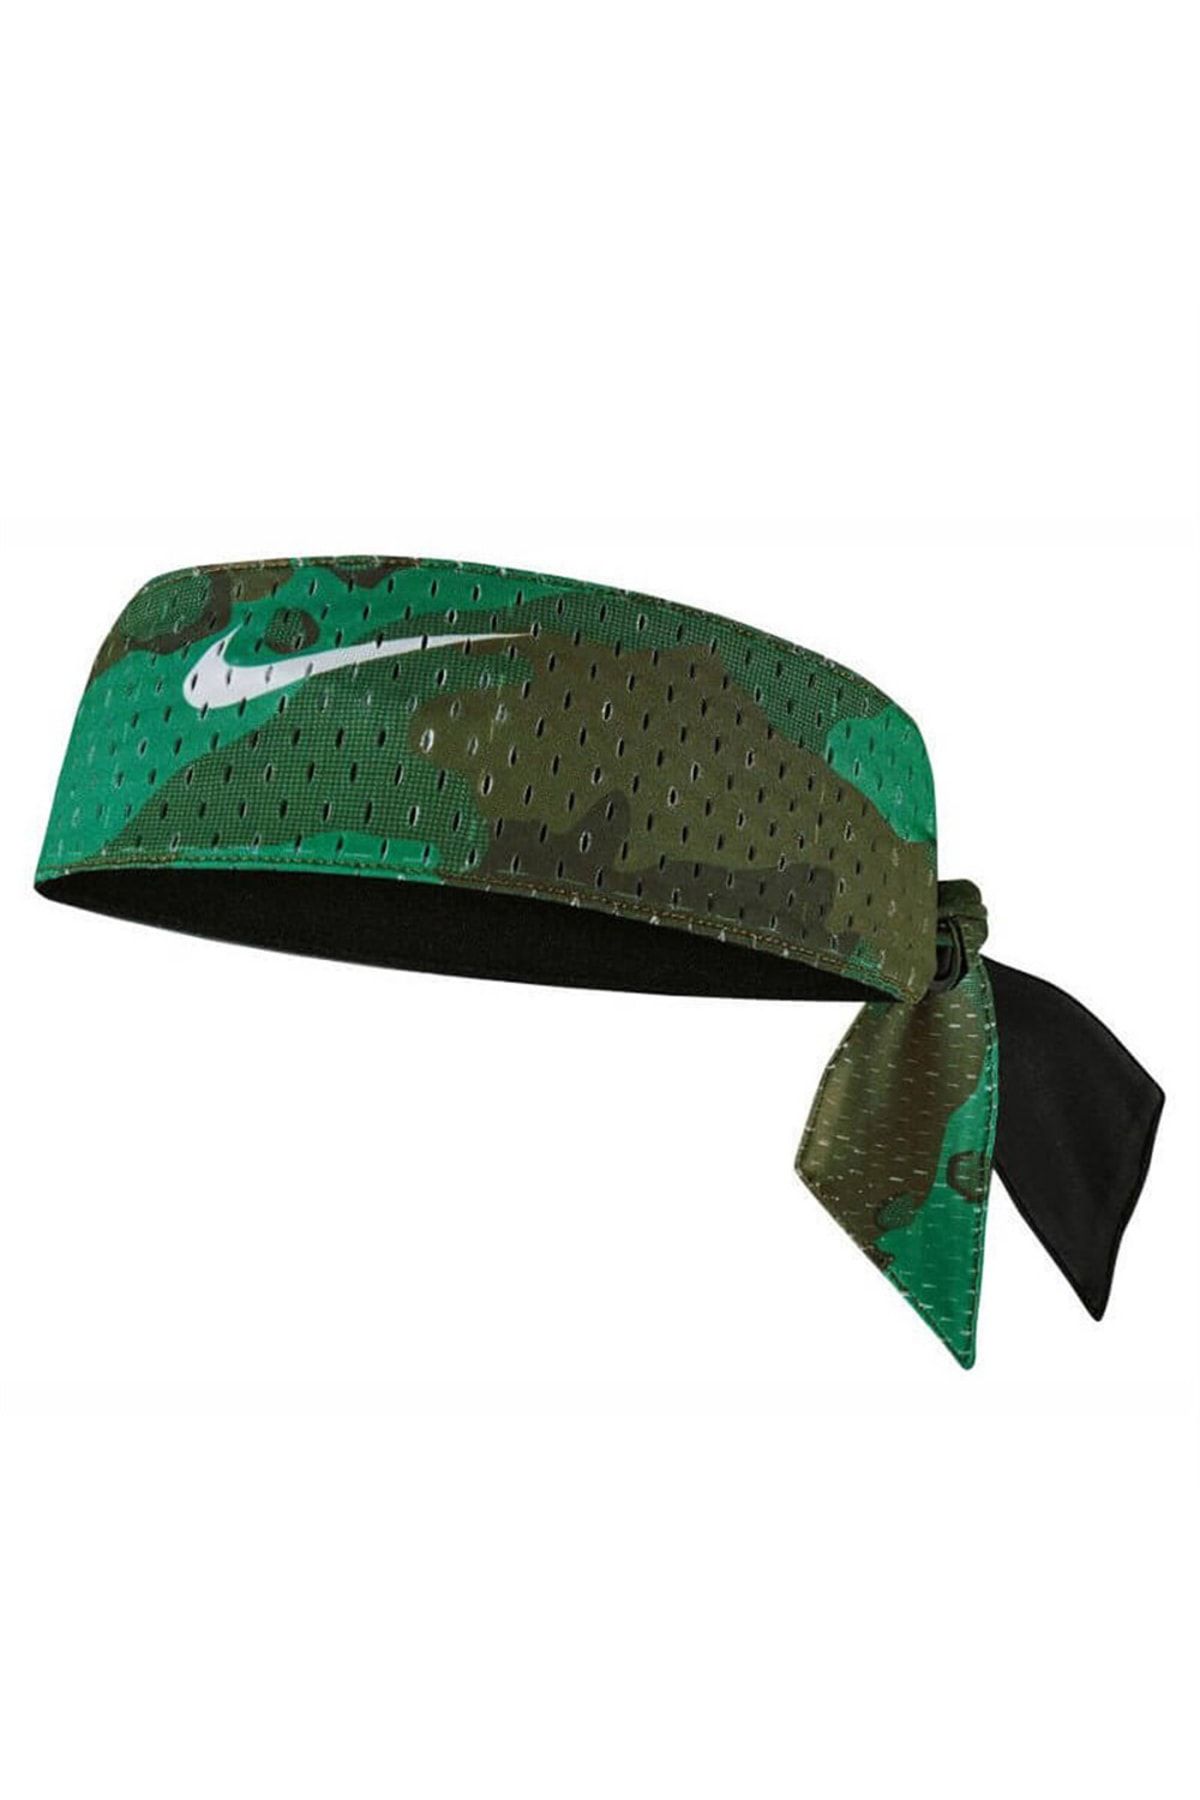 Nike Dri Fit Head Tie Bandana Çift Taraflı Tenisçi Kafa Bandı Yeşil Kamuflaj Ve Siyah